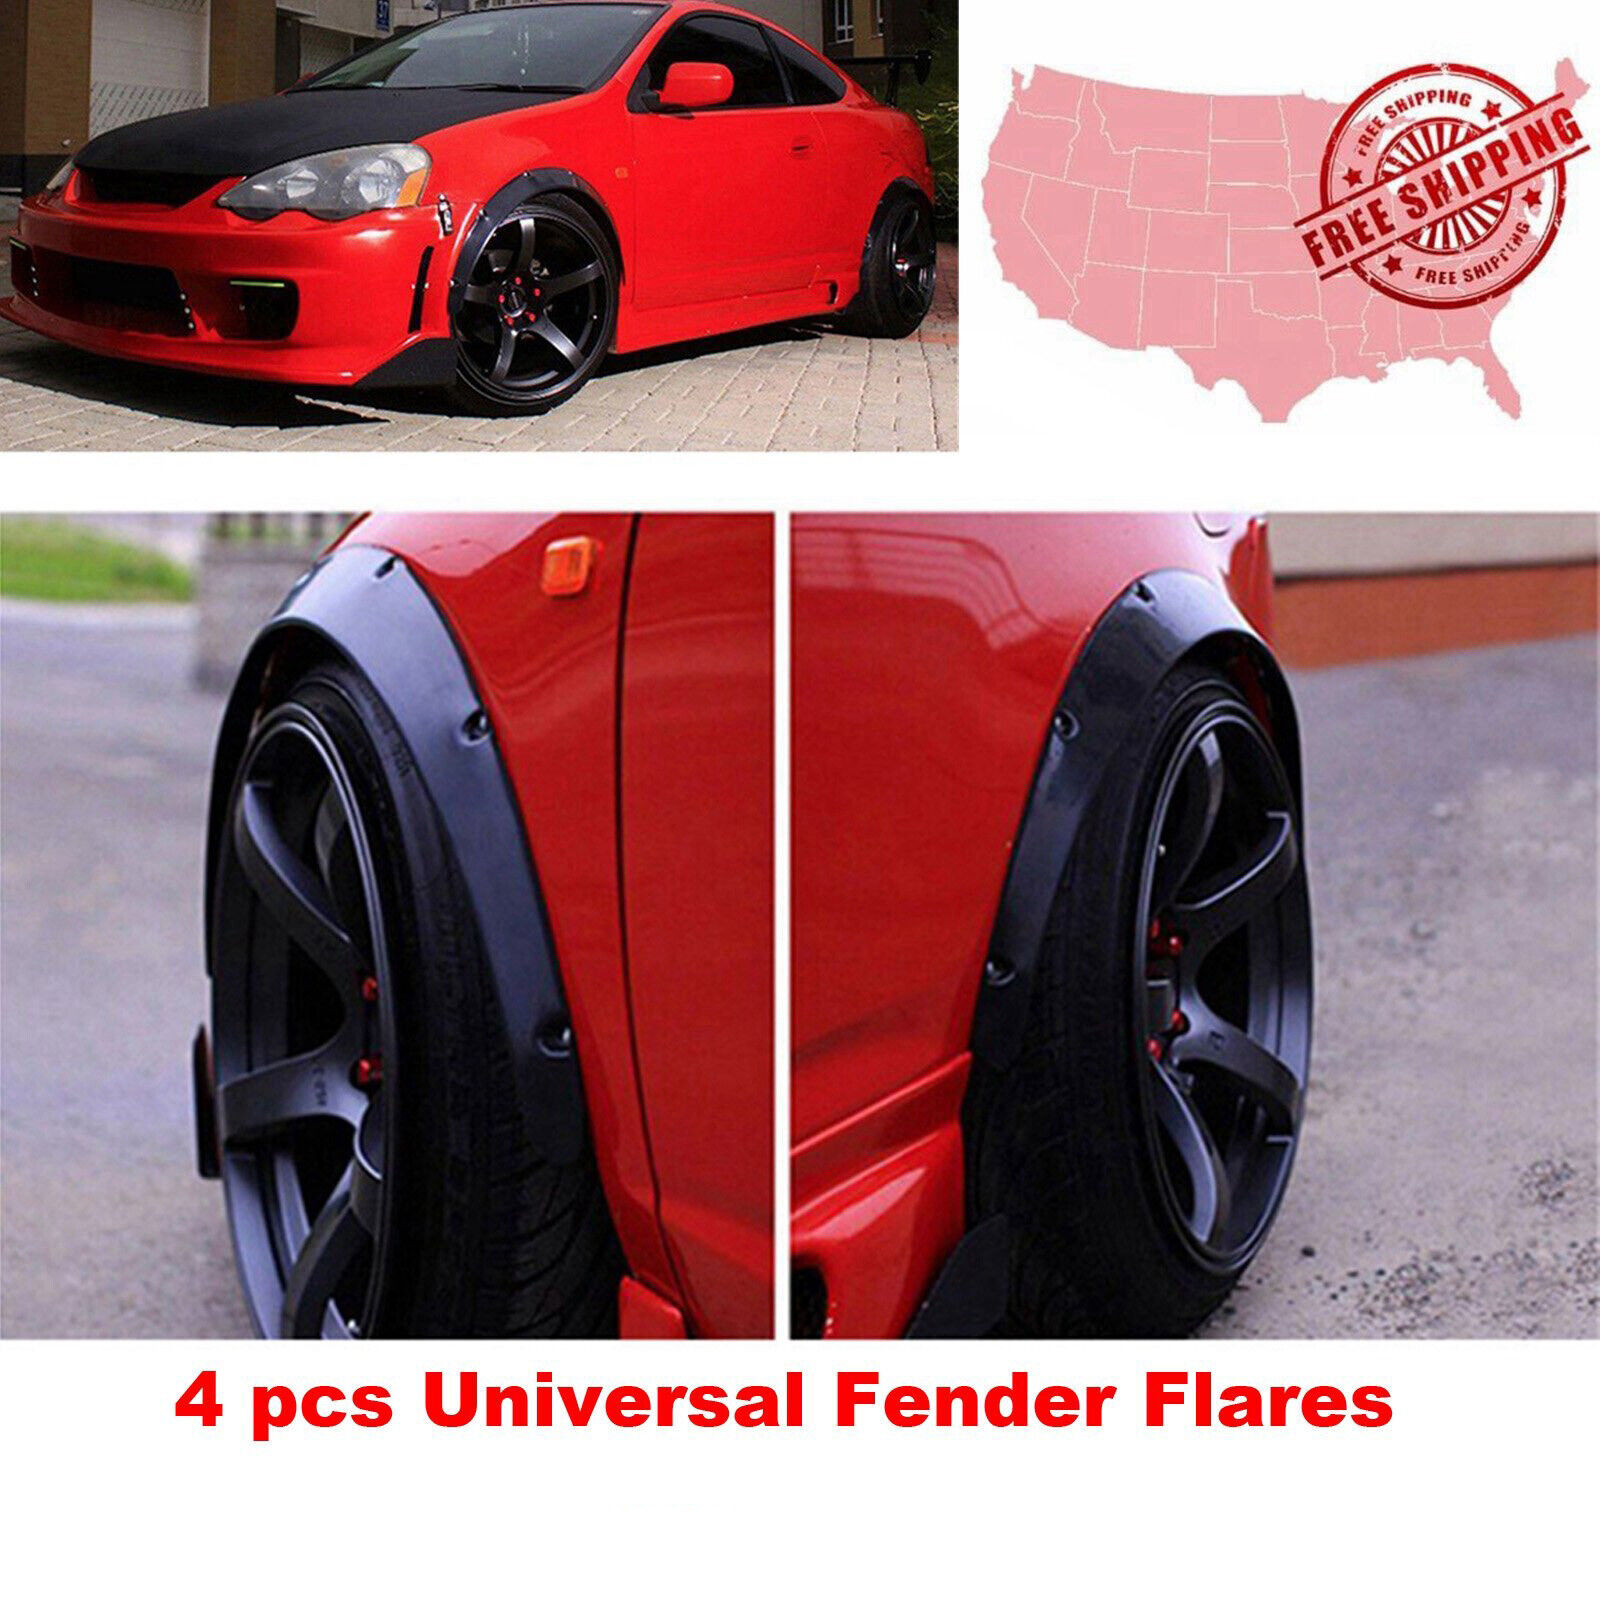 4x Black Universal Fender Flares Flexible Durable Polyurethane Auto Car Body Kit